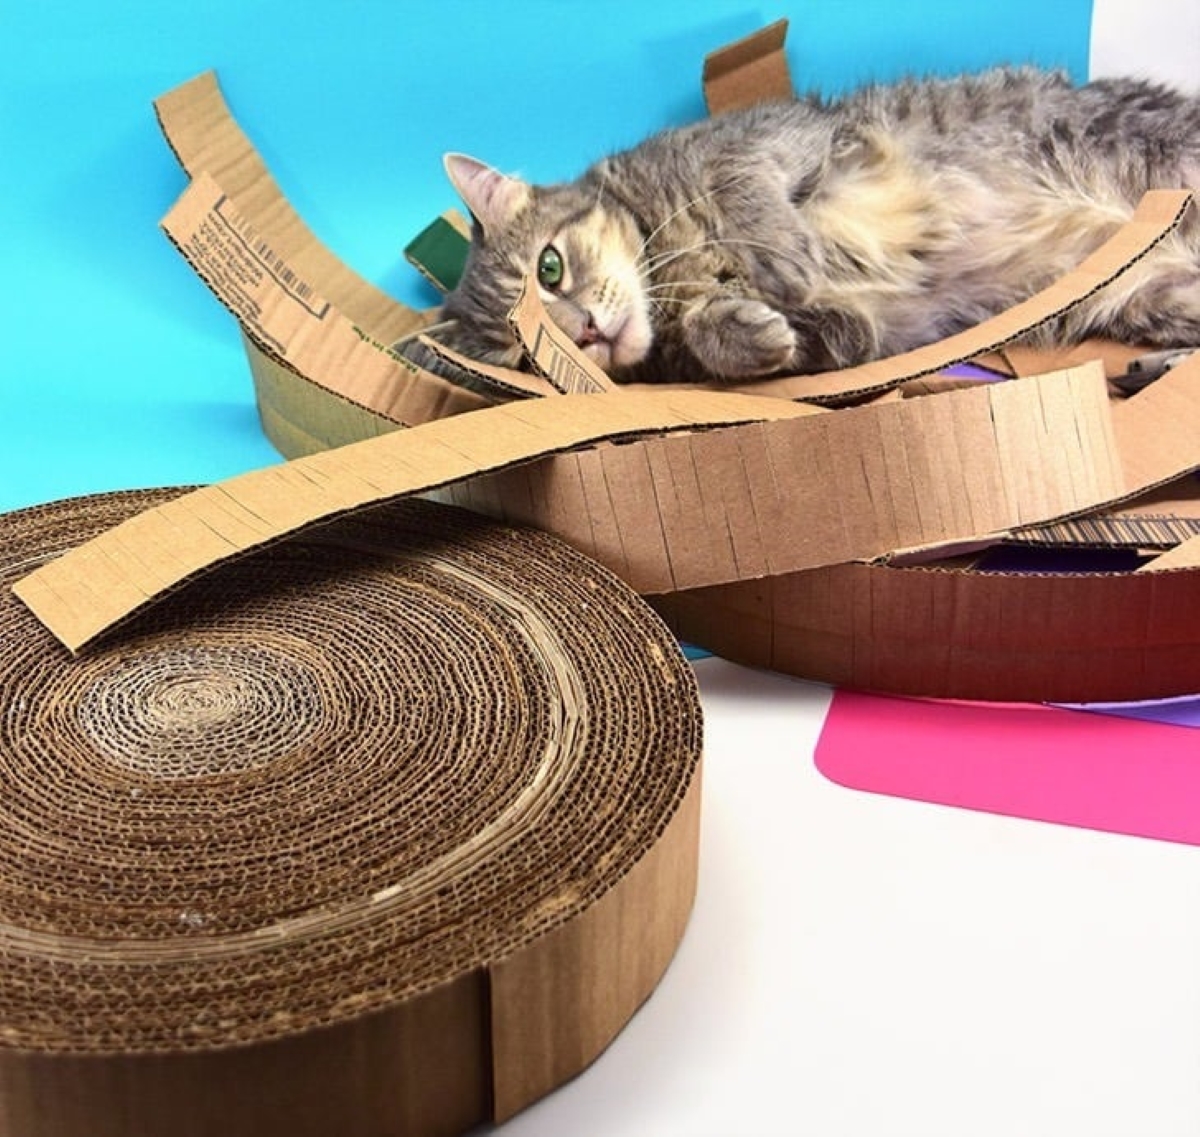 Cat on corrugated cardboard.